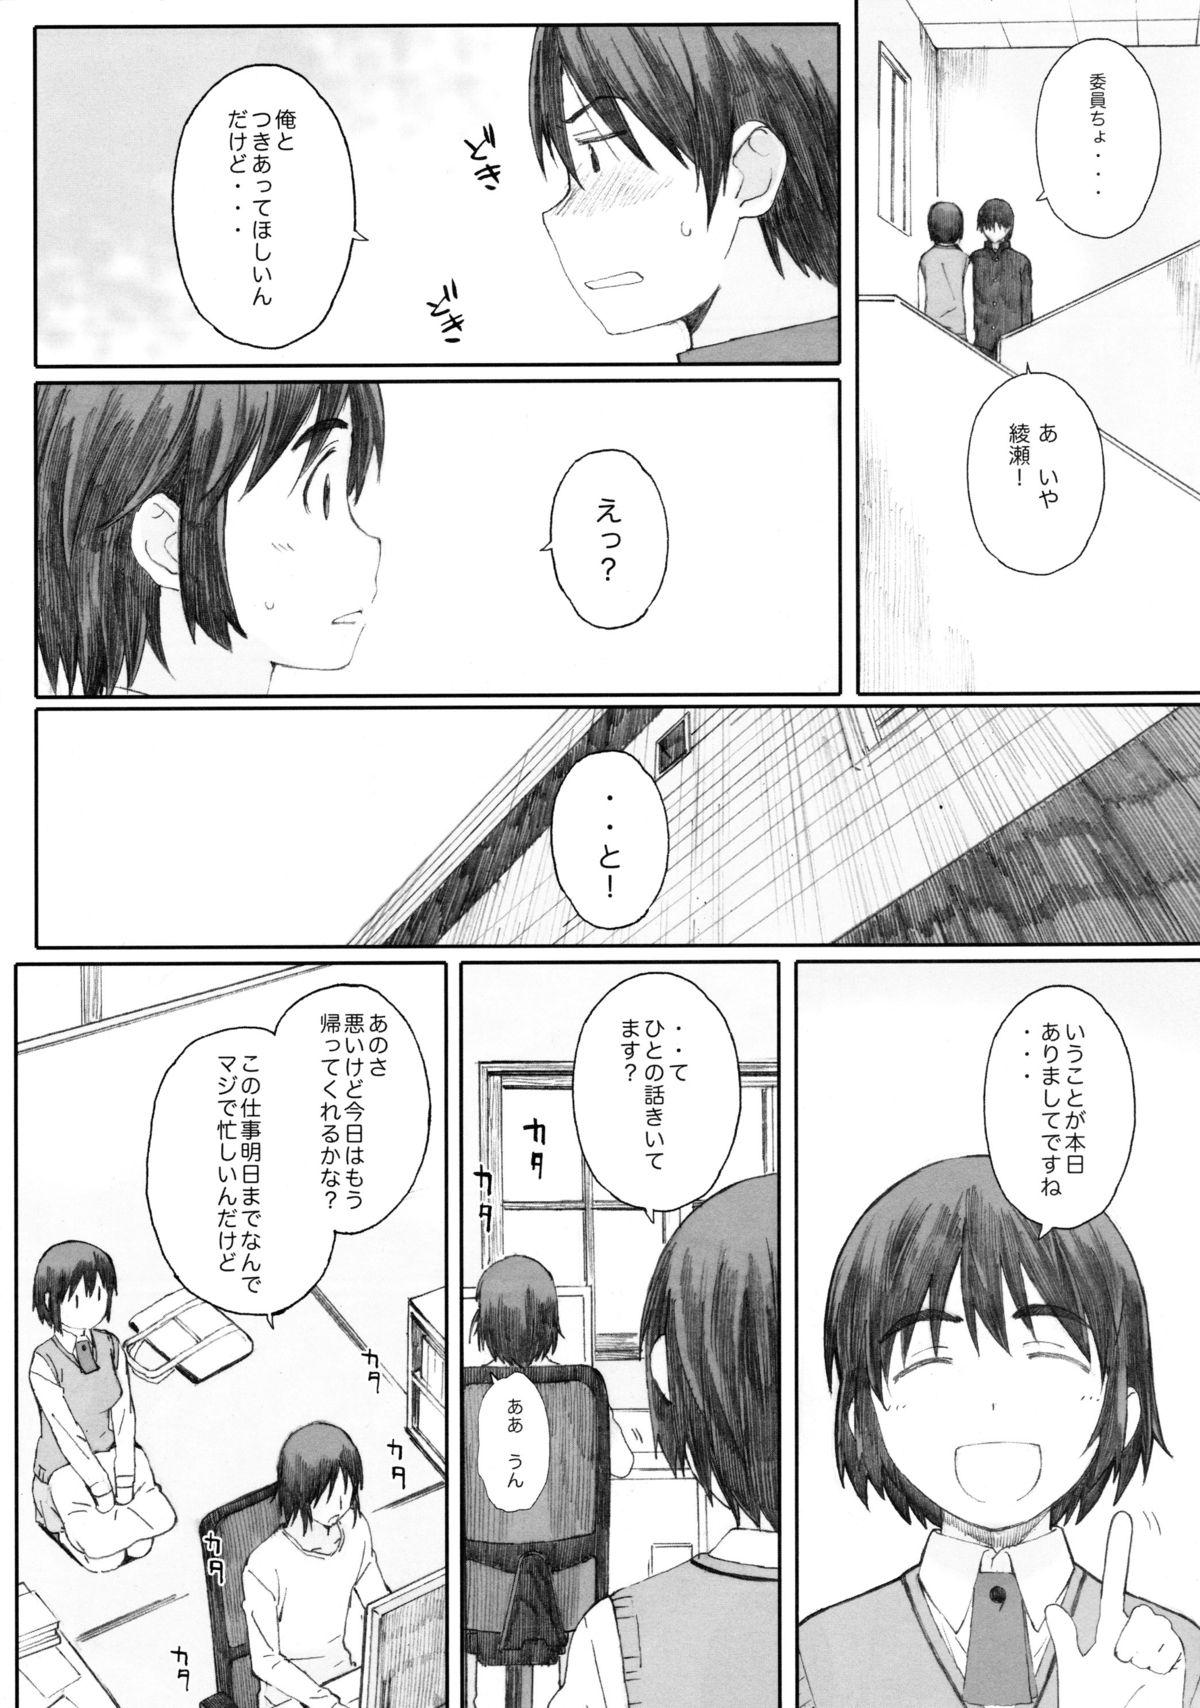 Amatuer clover＊1 - Yotsubato Exposed - Page 2